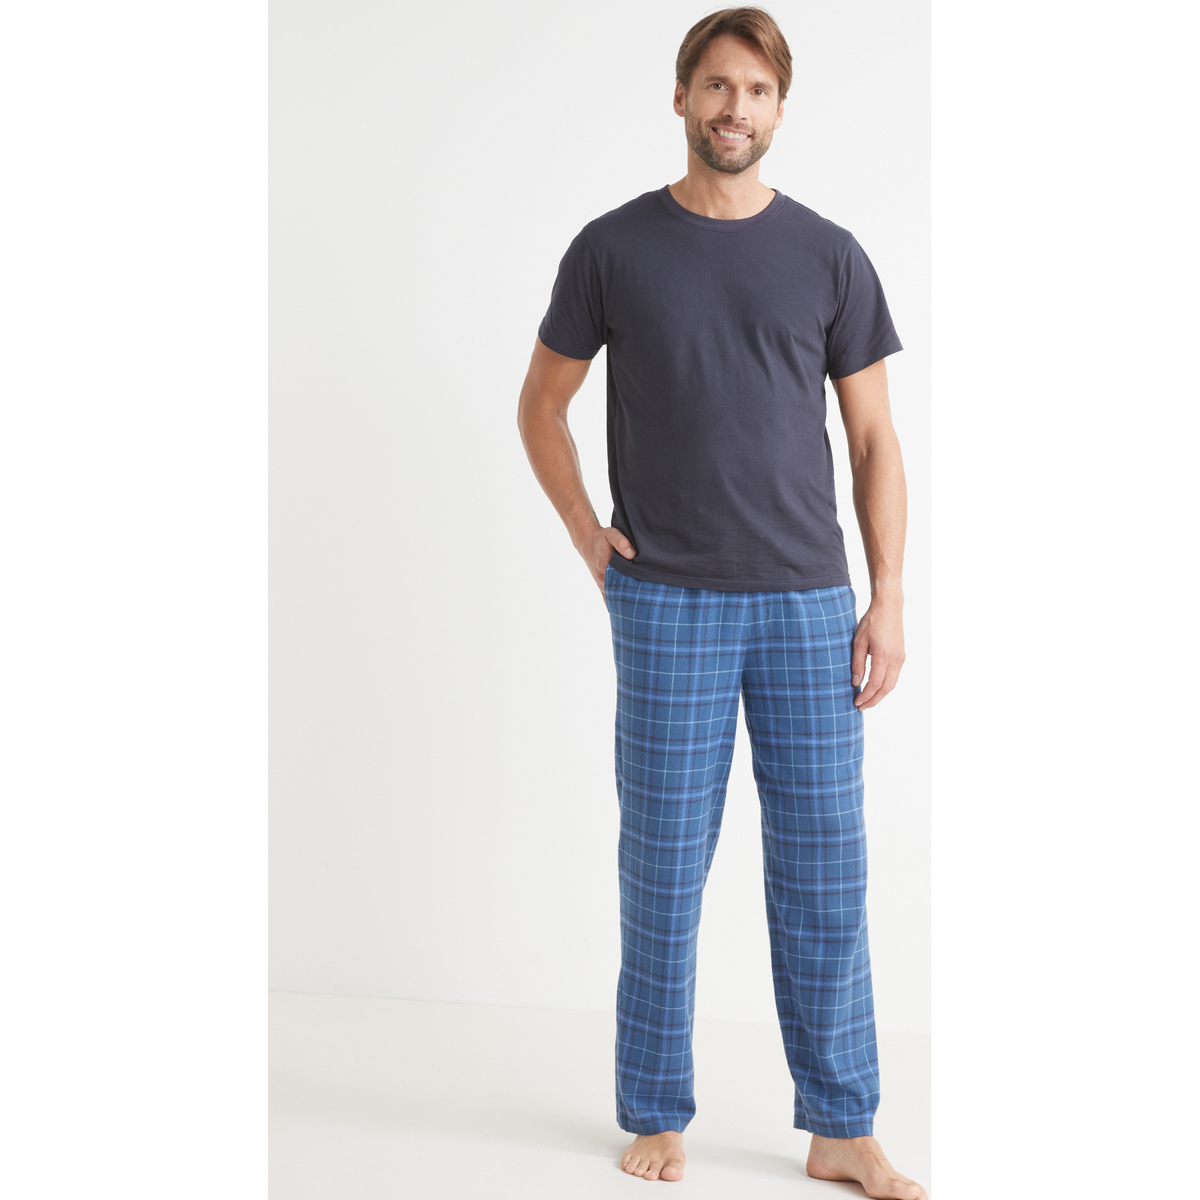 Daxon Bleu by - Pyjama homme jersey et flanelle mmAzW84y